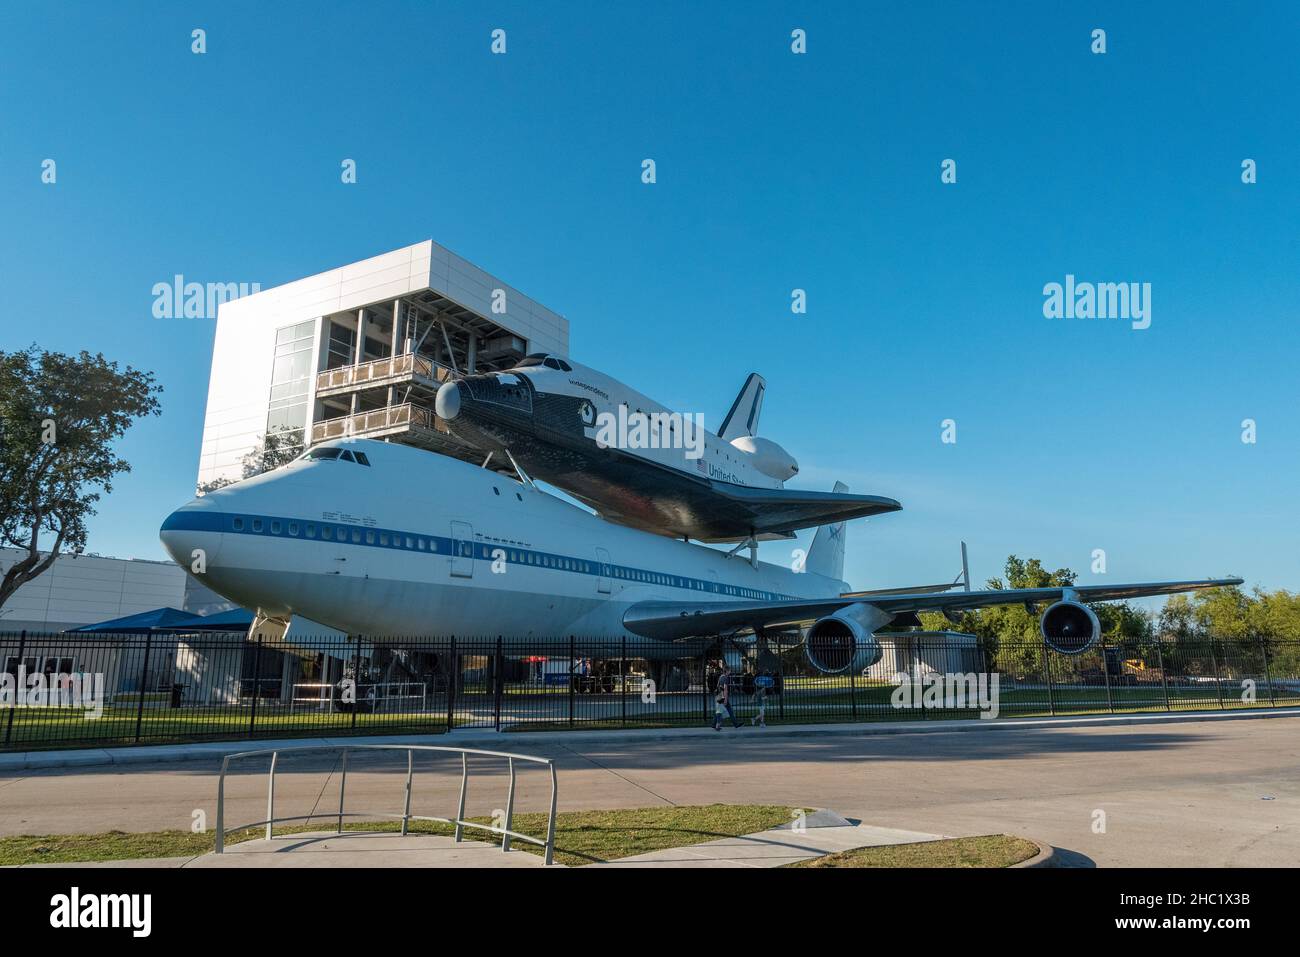 HOUSTON, TEXAS - 02. NOVEMBER 2018: NASA Space Shuttle Independence und sein Flugzeugträger in Houston, Texas, USA Stockfoto